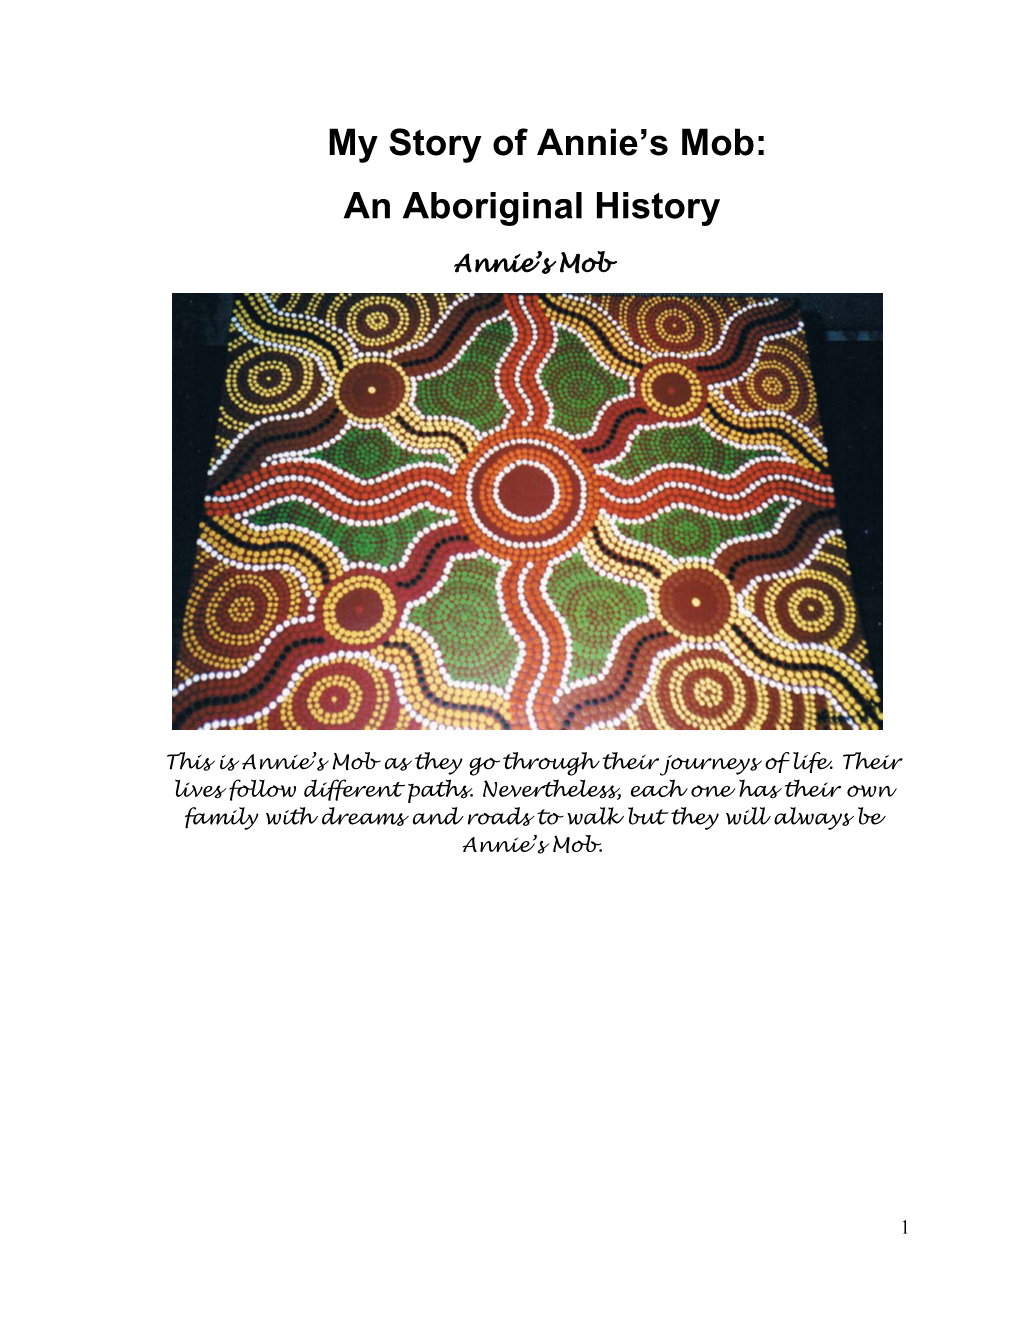 An Aboriginal History